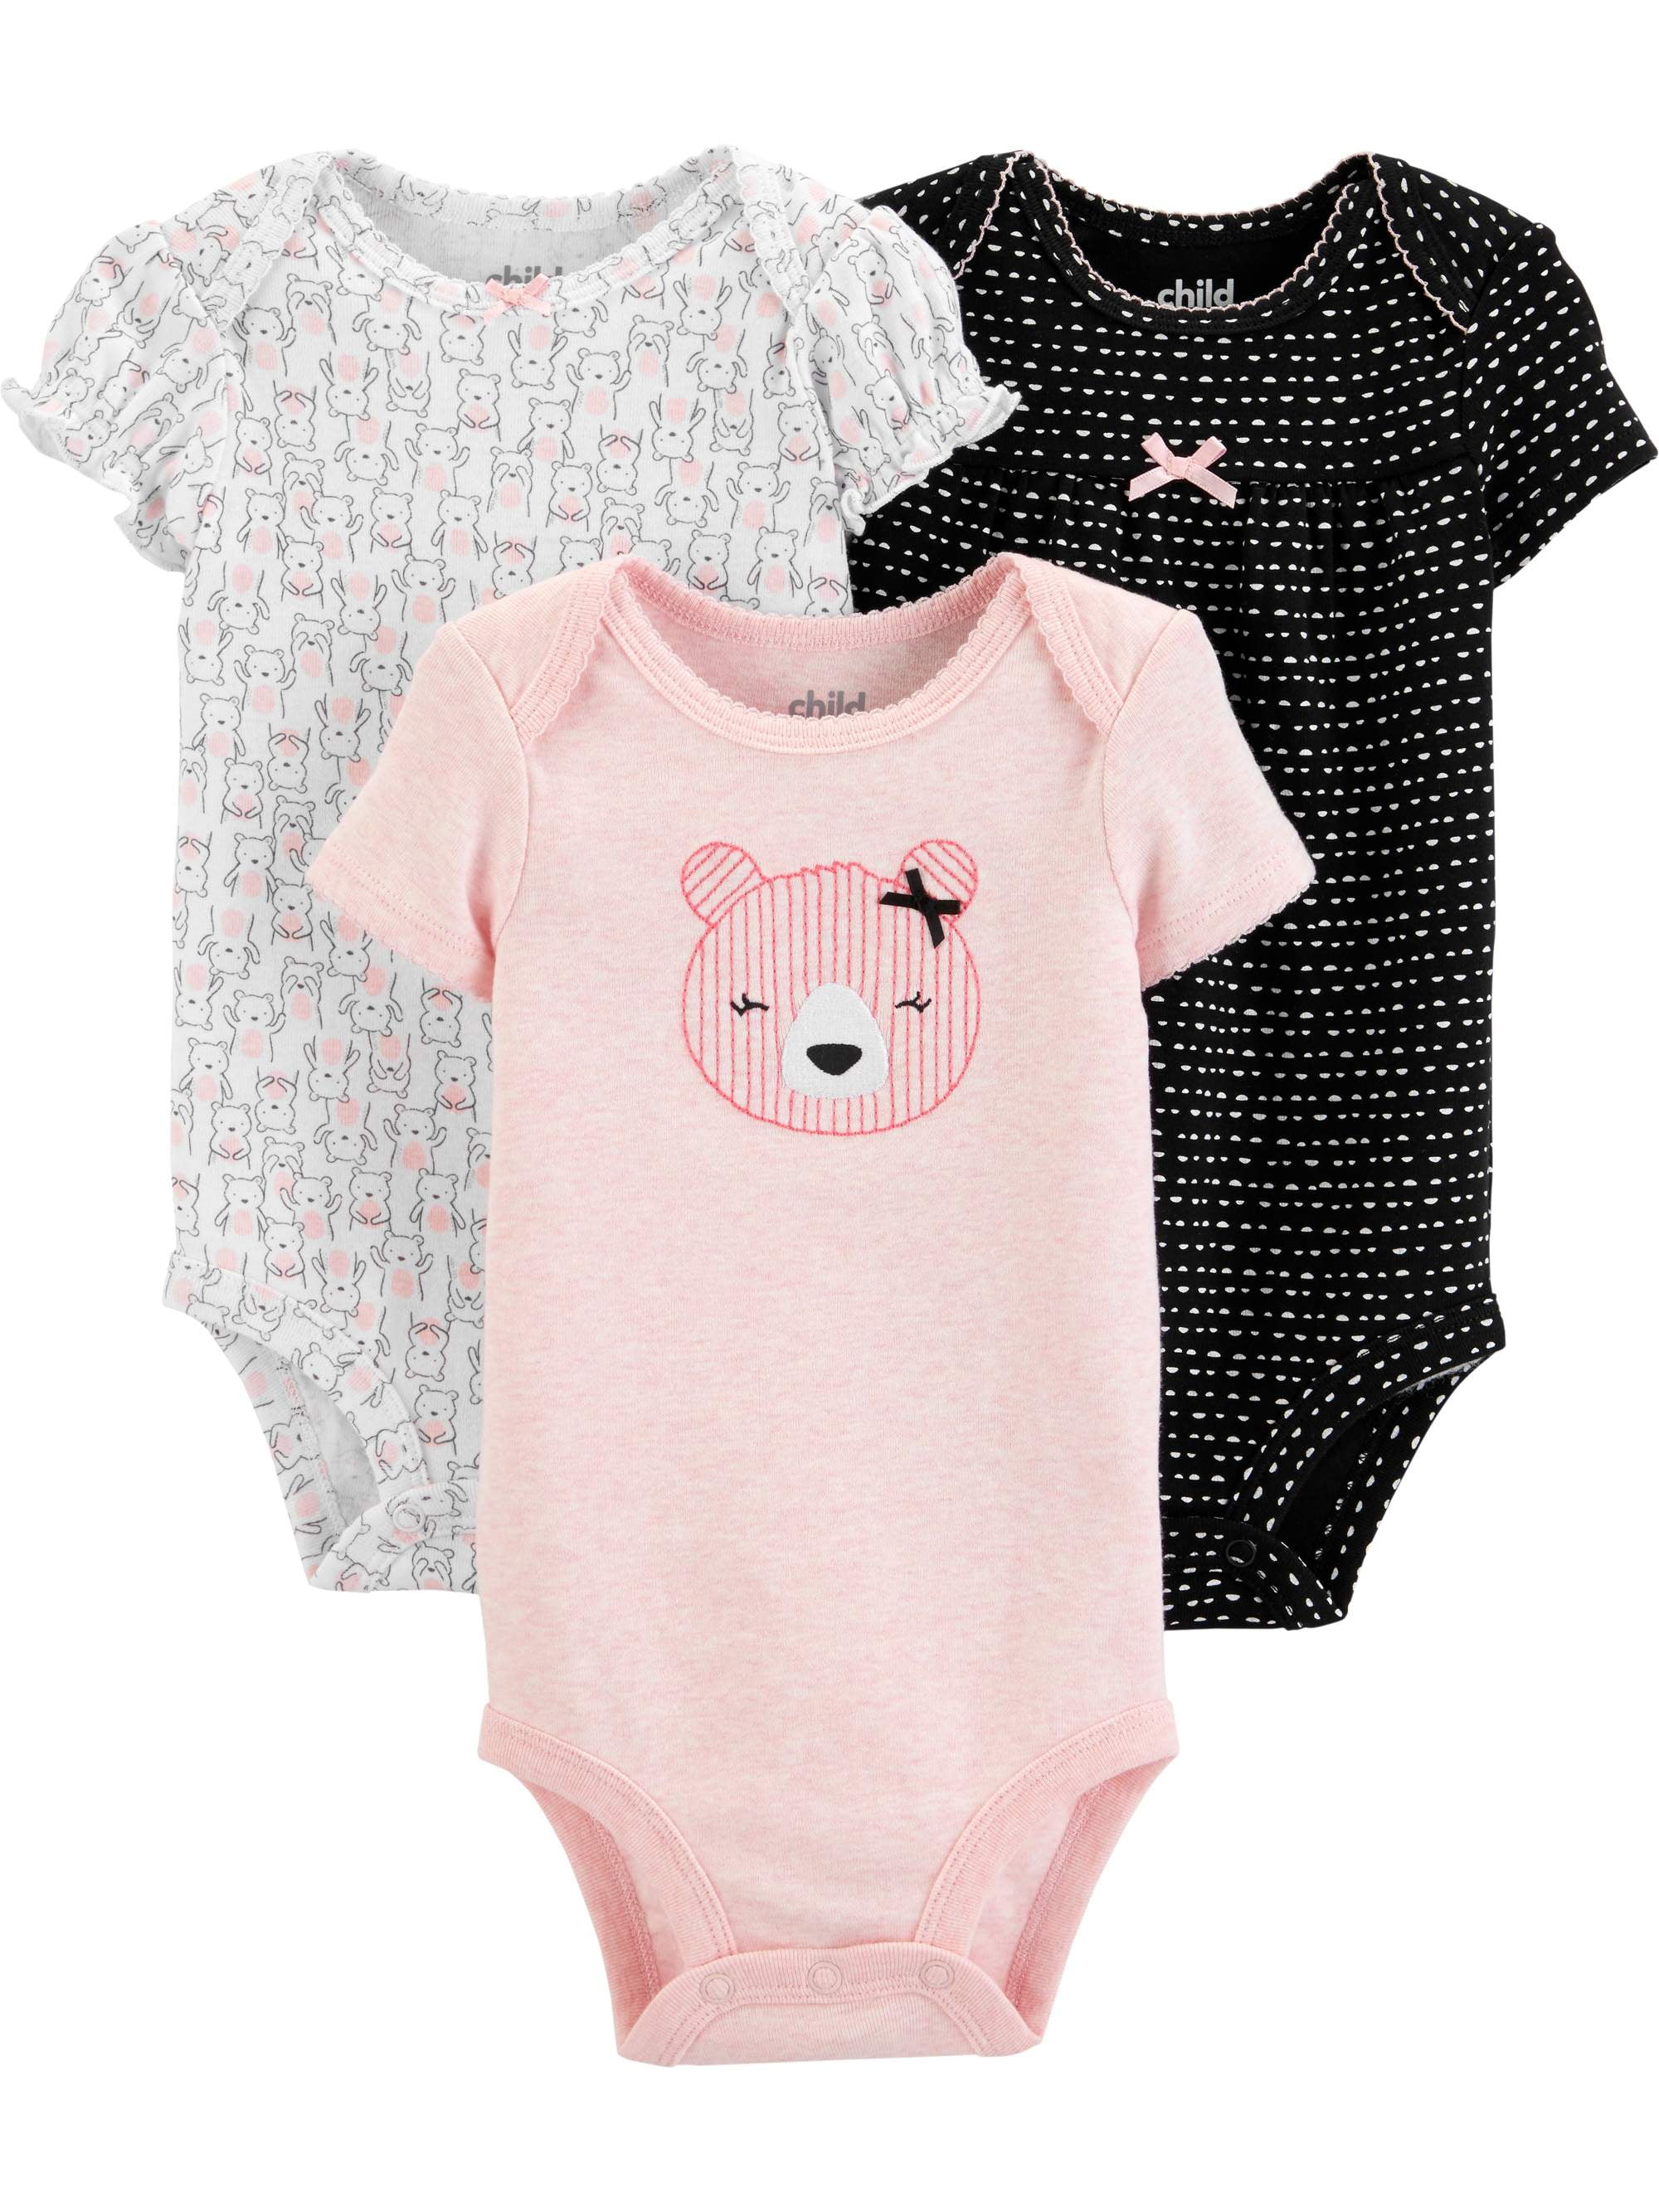 Great Horned Owl Baby Toddler Infant Short Sleeve Cotton Bodysuit Black, Pink Gray